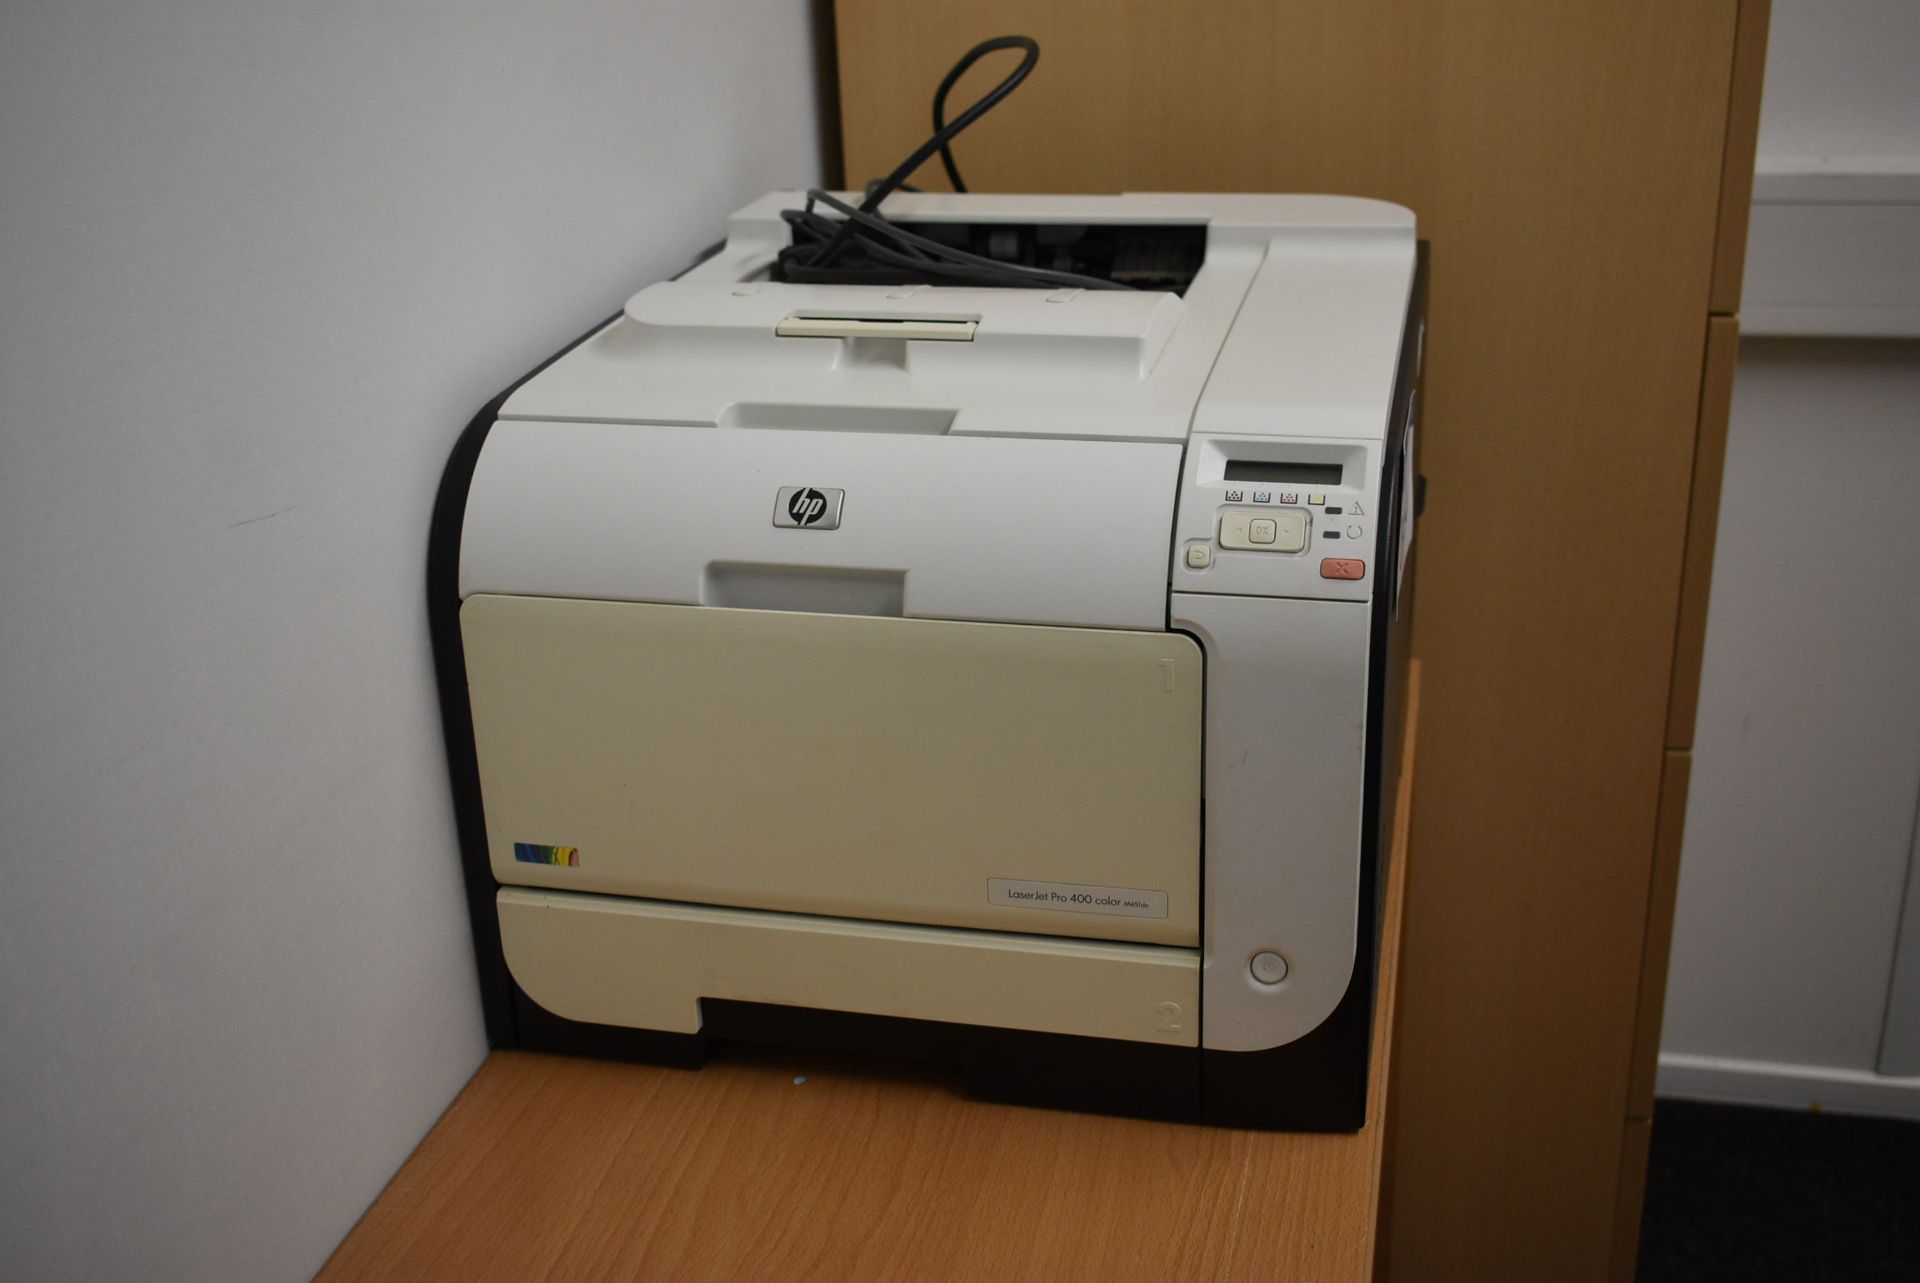 HP LaserJet Pro 400 color M451dn Printer, with thr